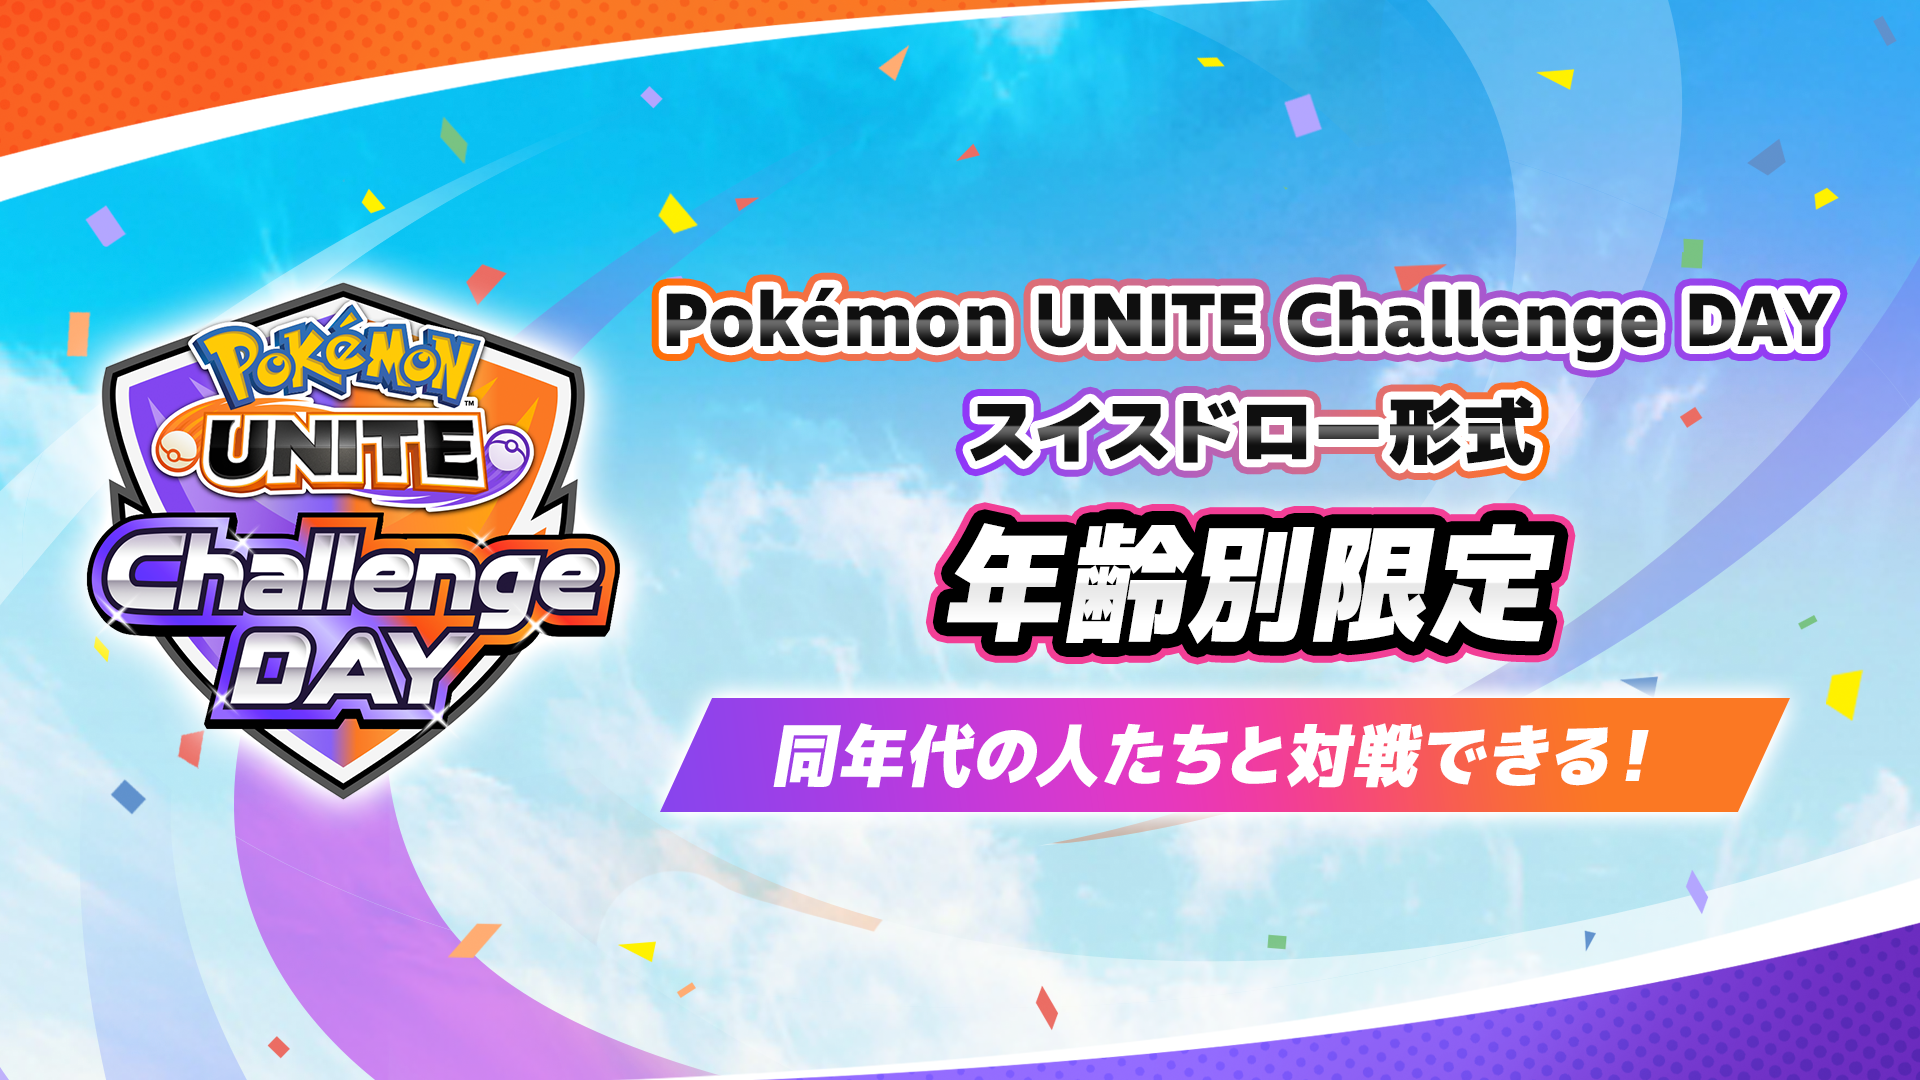 Pokémon UNITE Challenge DAY 10.16 年齢別限定 スイスドロー形式